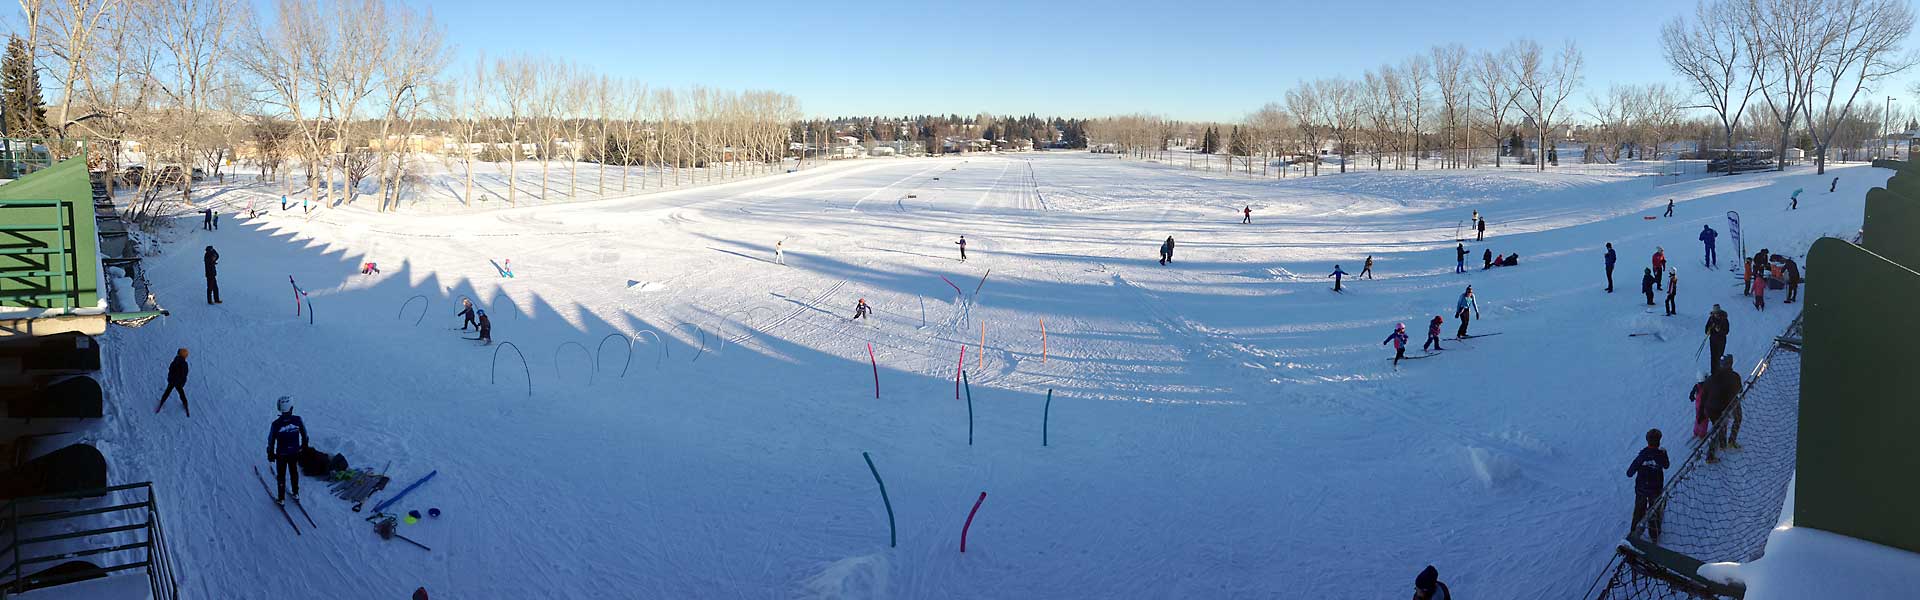 Ski Trails at Confederation Park Golf Course